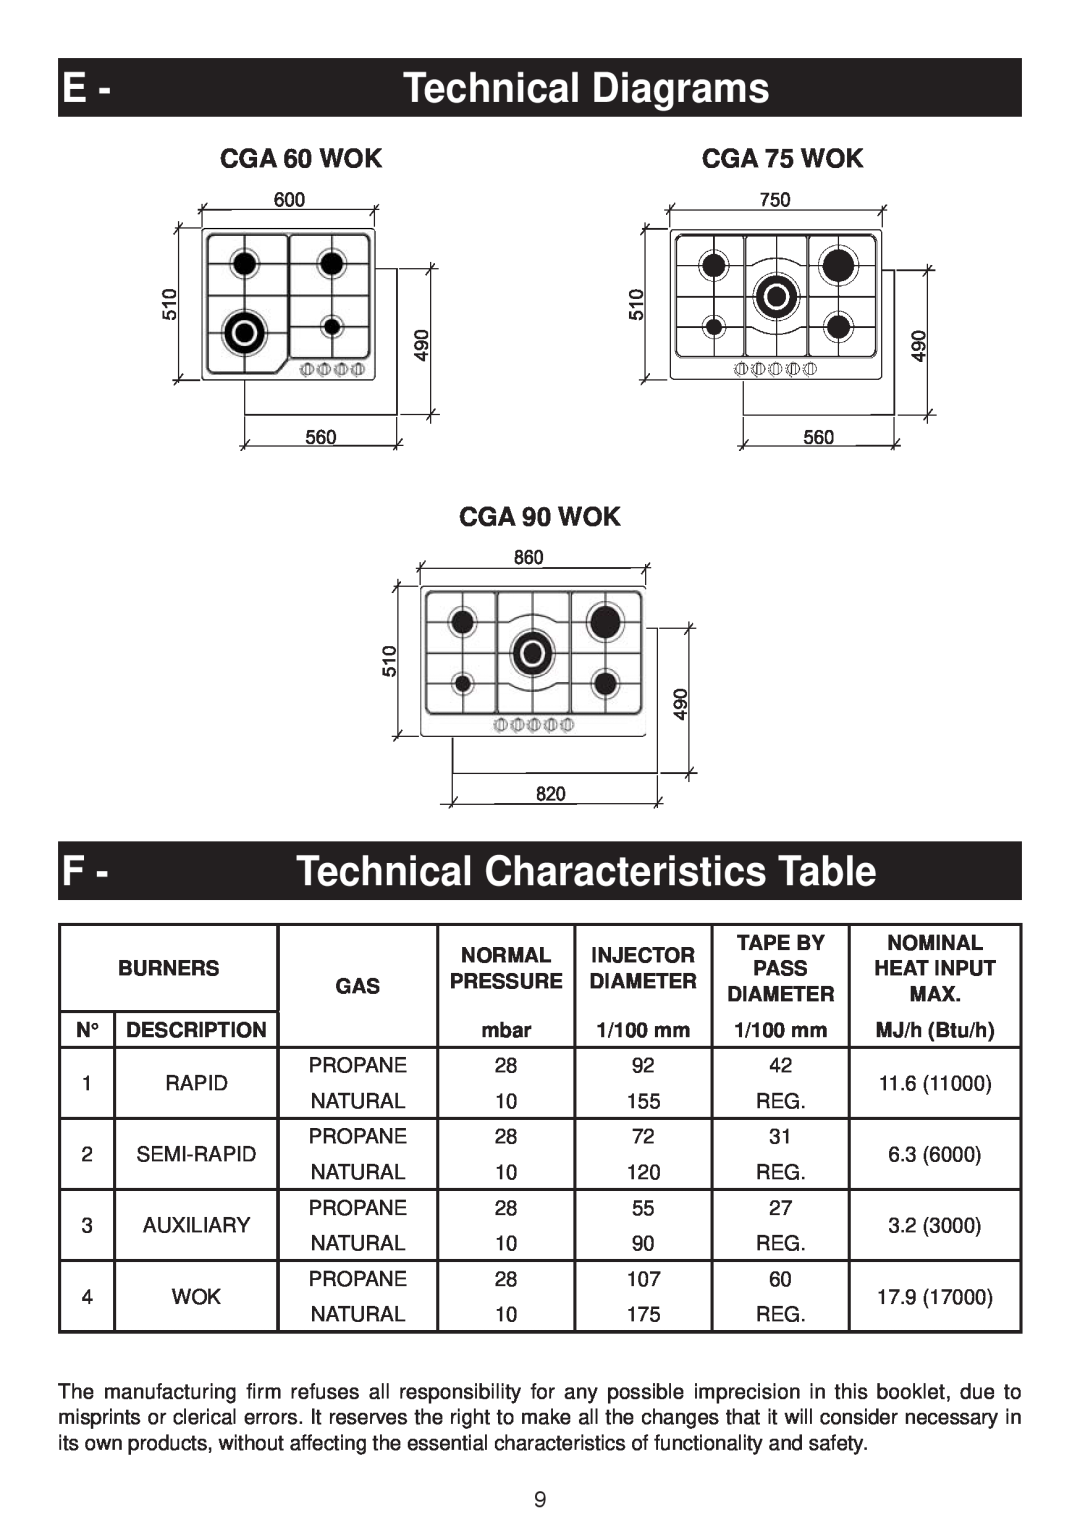 AEG CGA 60 WOK Technical Diagrams, Technical Characteristics Table, CGA 75 WOK, CGA 90 WOK, Normal, Injector, Tape By 